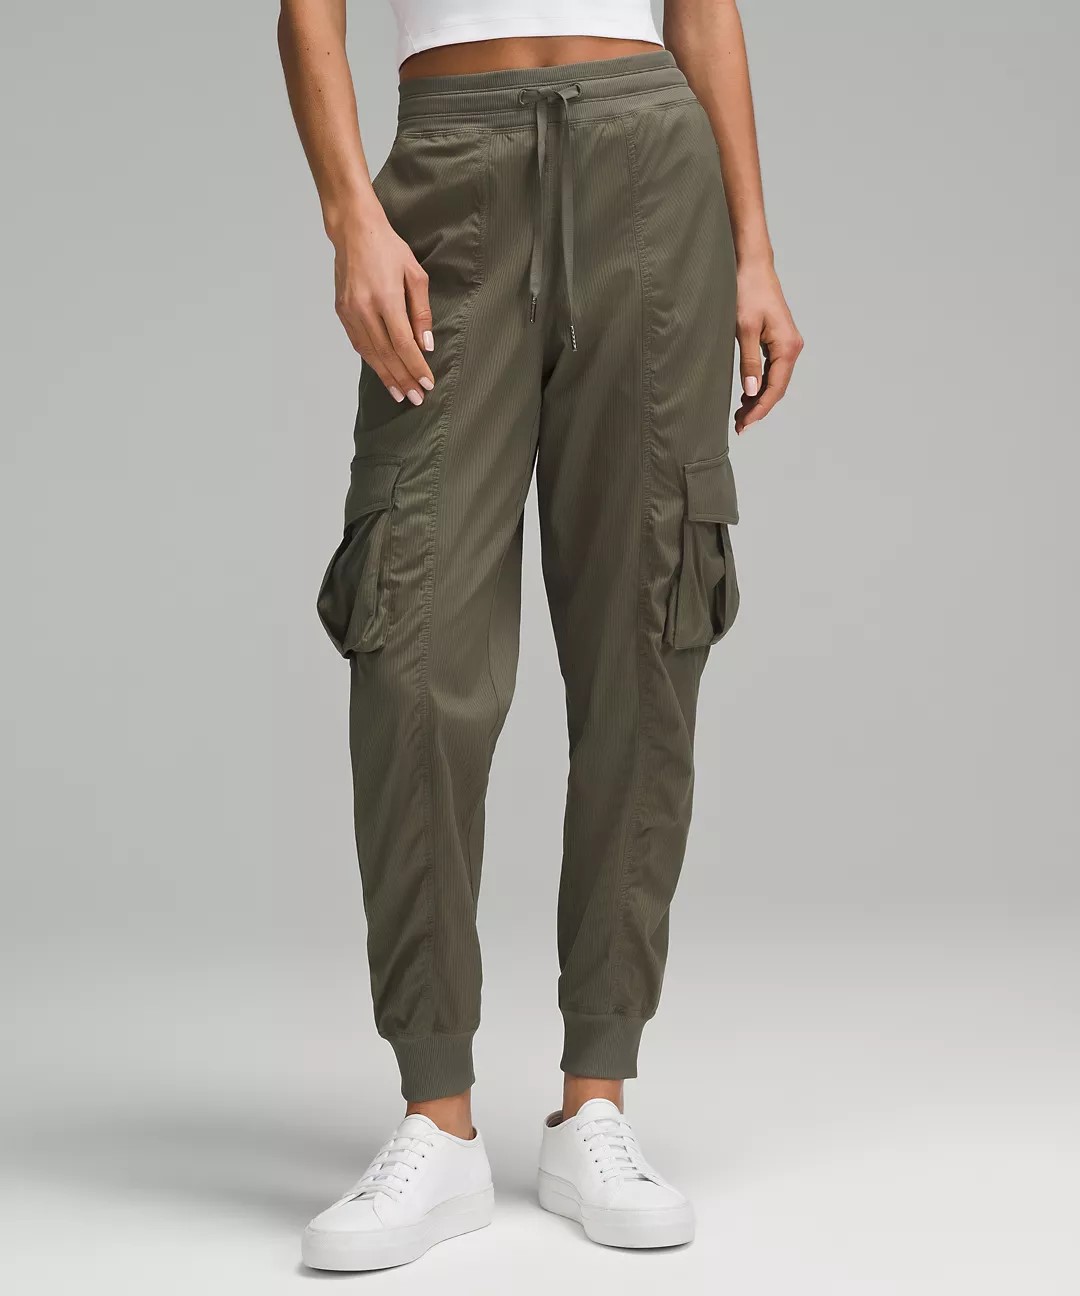 lululemon Dance Studio pants in new cargo style under $130: Where